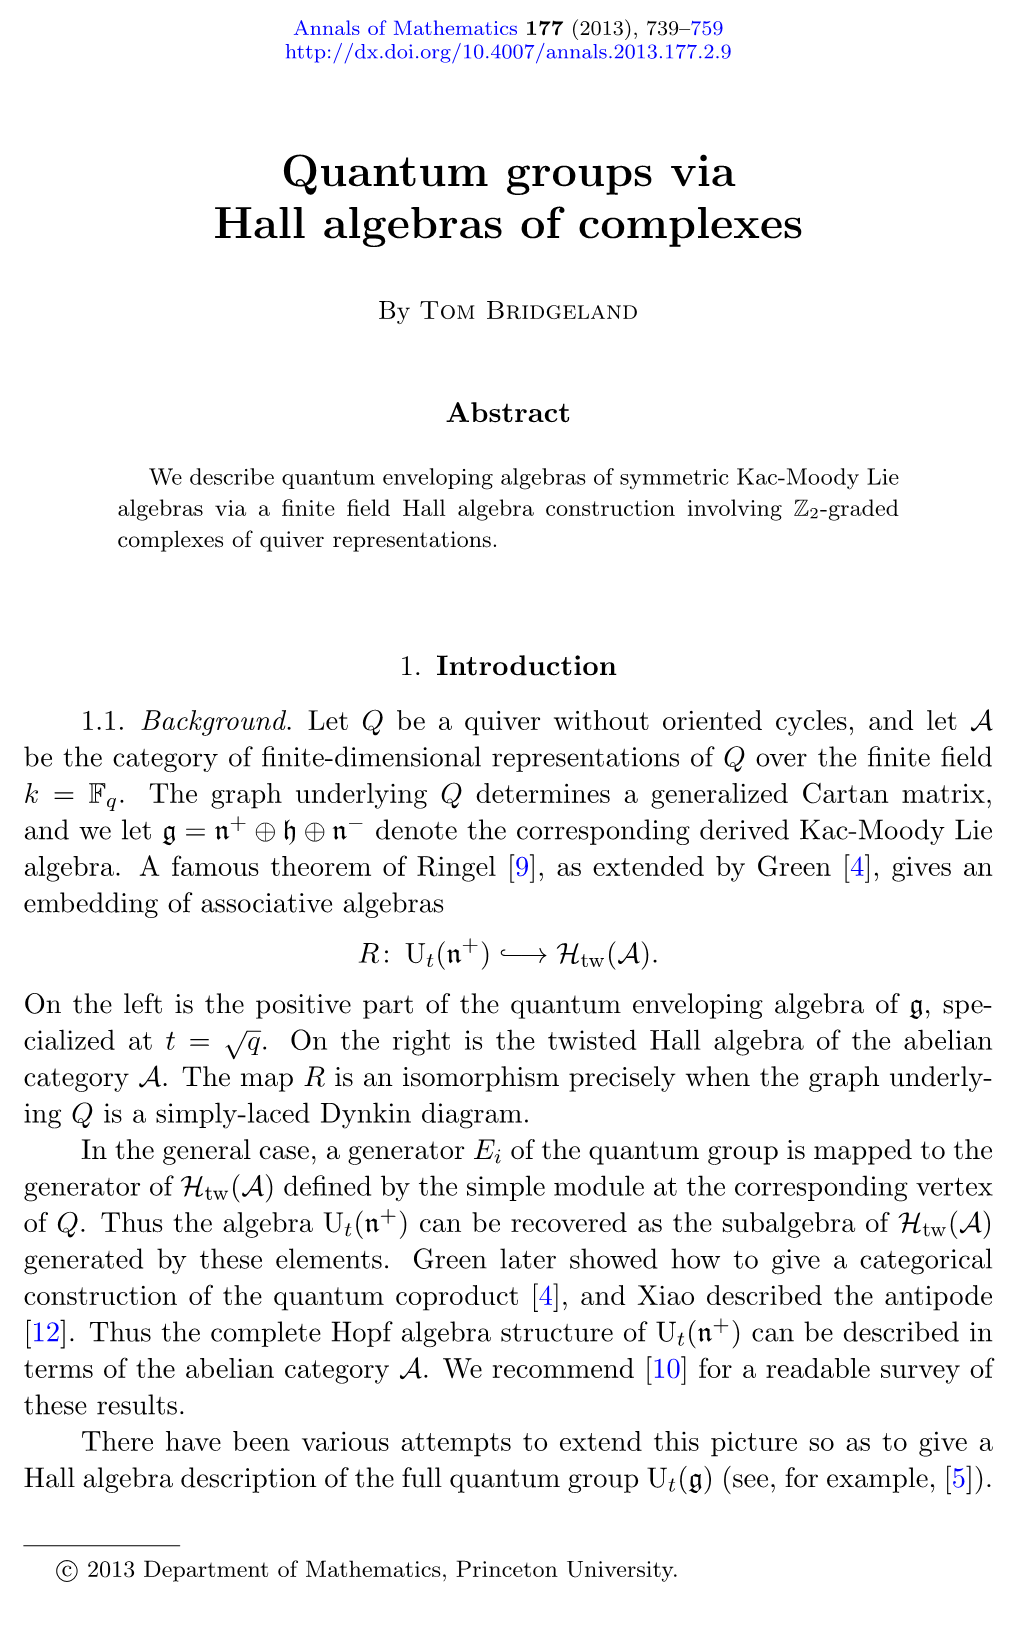 Quantum Groups Via Hall Algebras of Complexes